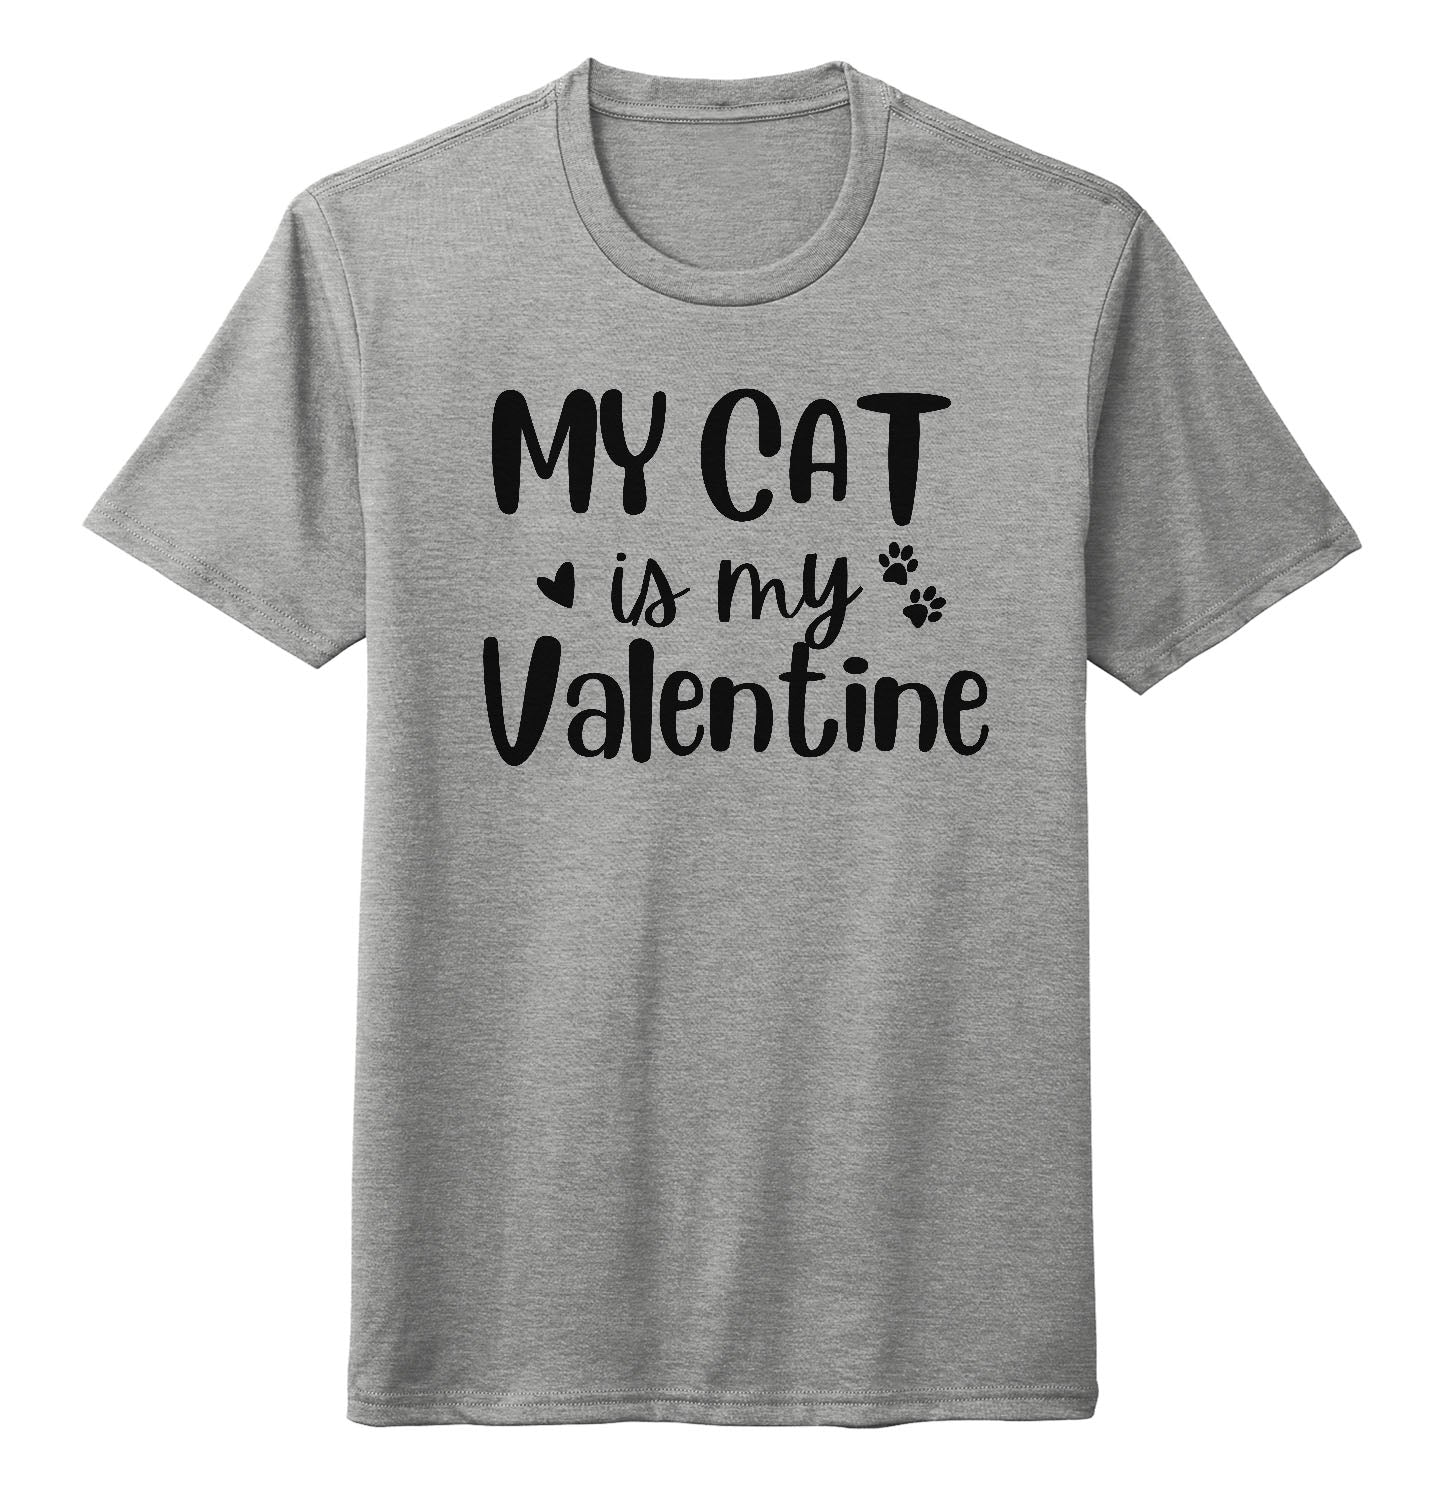 My Cat Valentine - Adult Tri-Blend T-Shirt